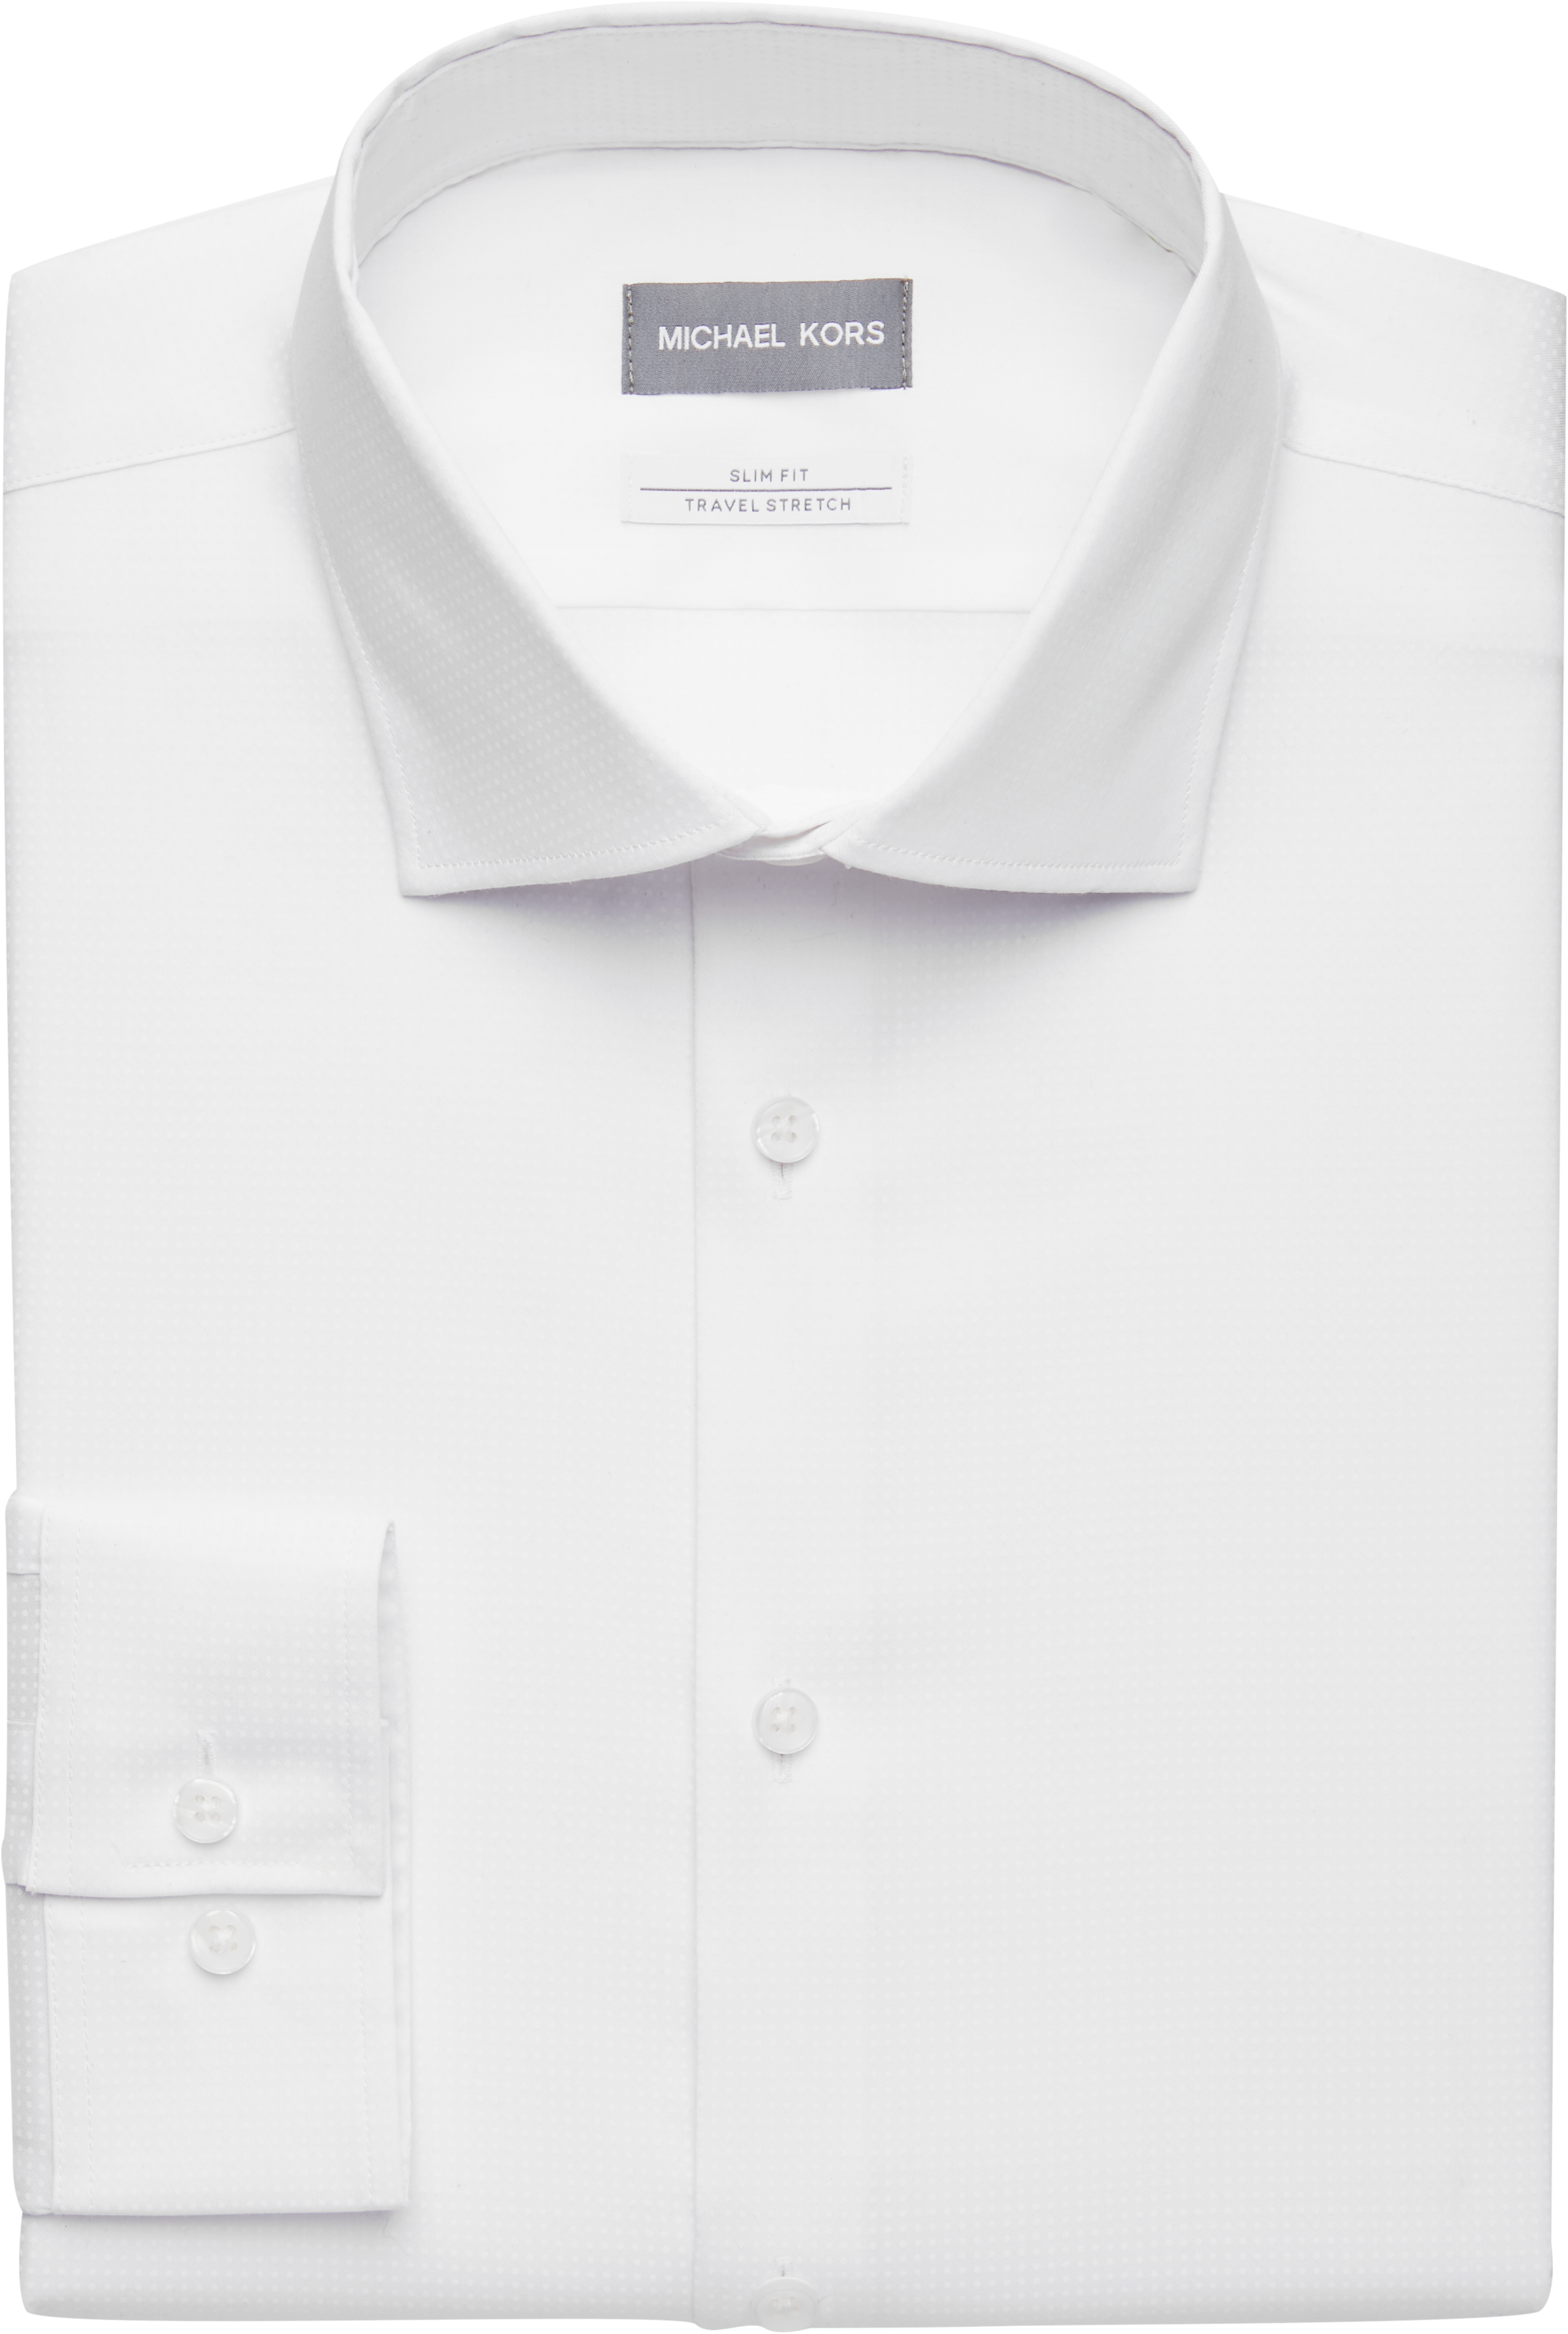 michael kors mens white dress shirt